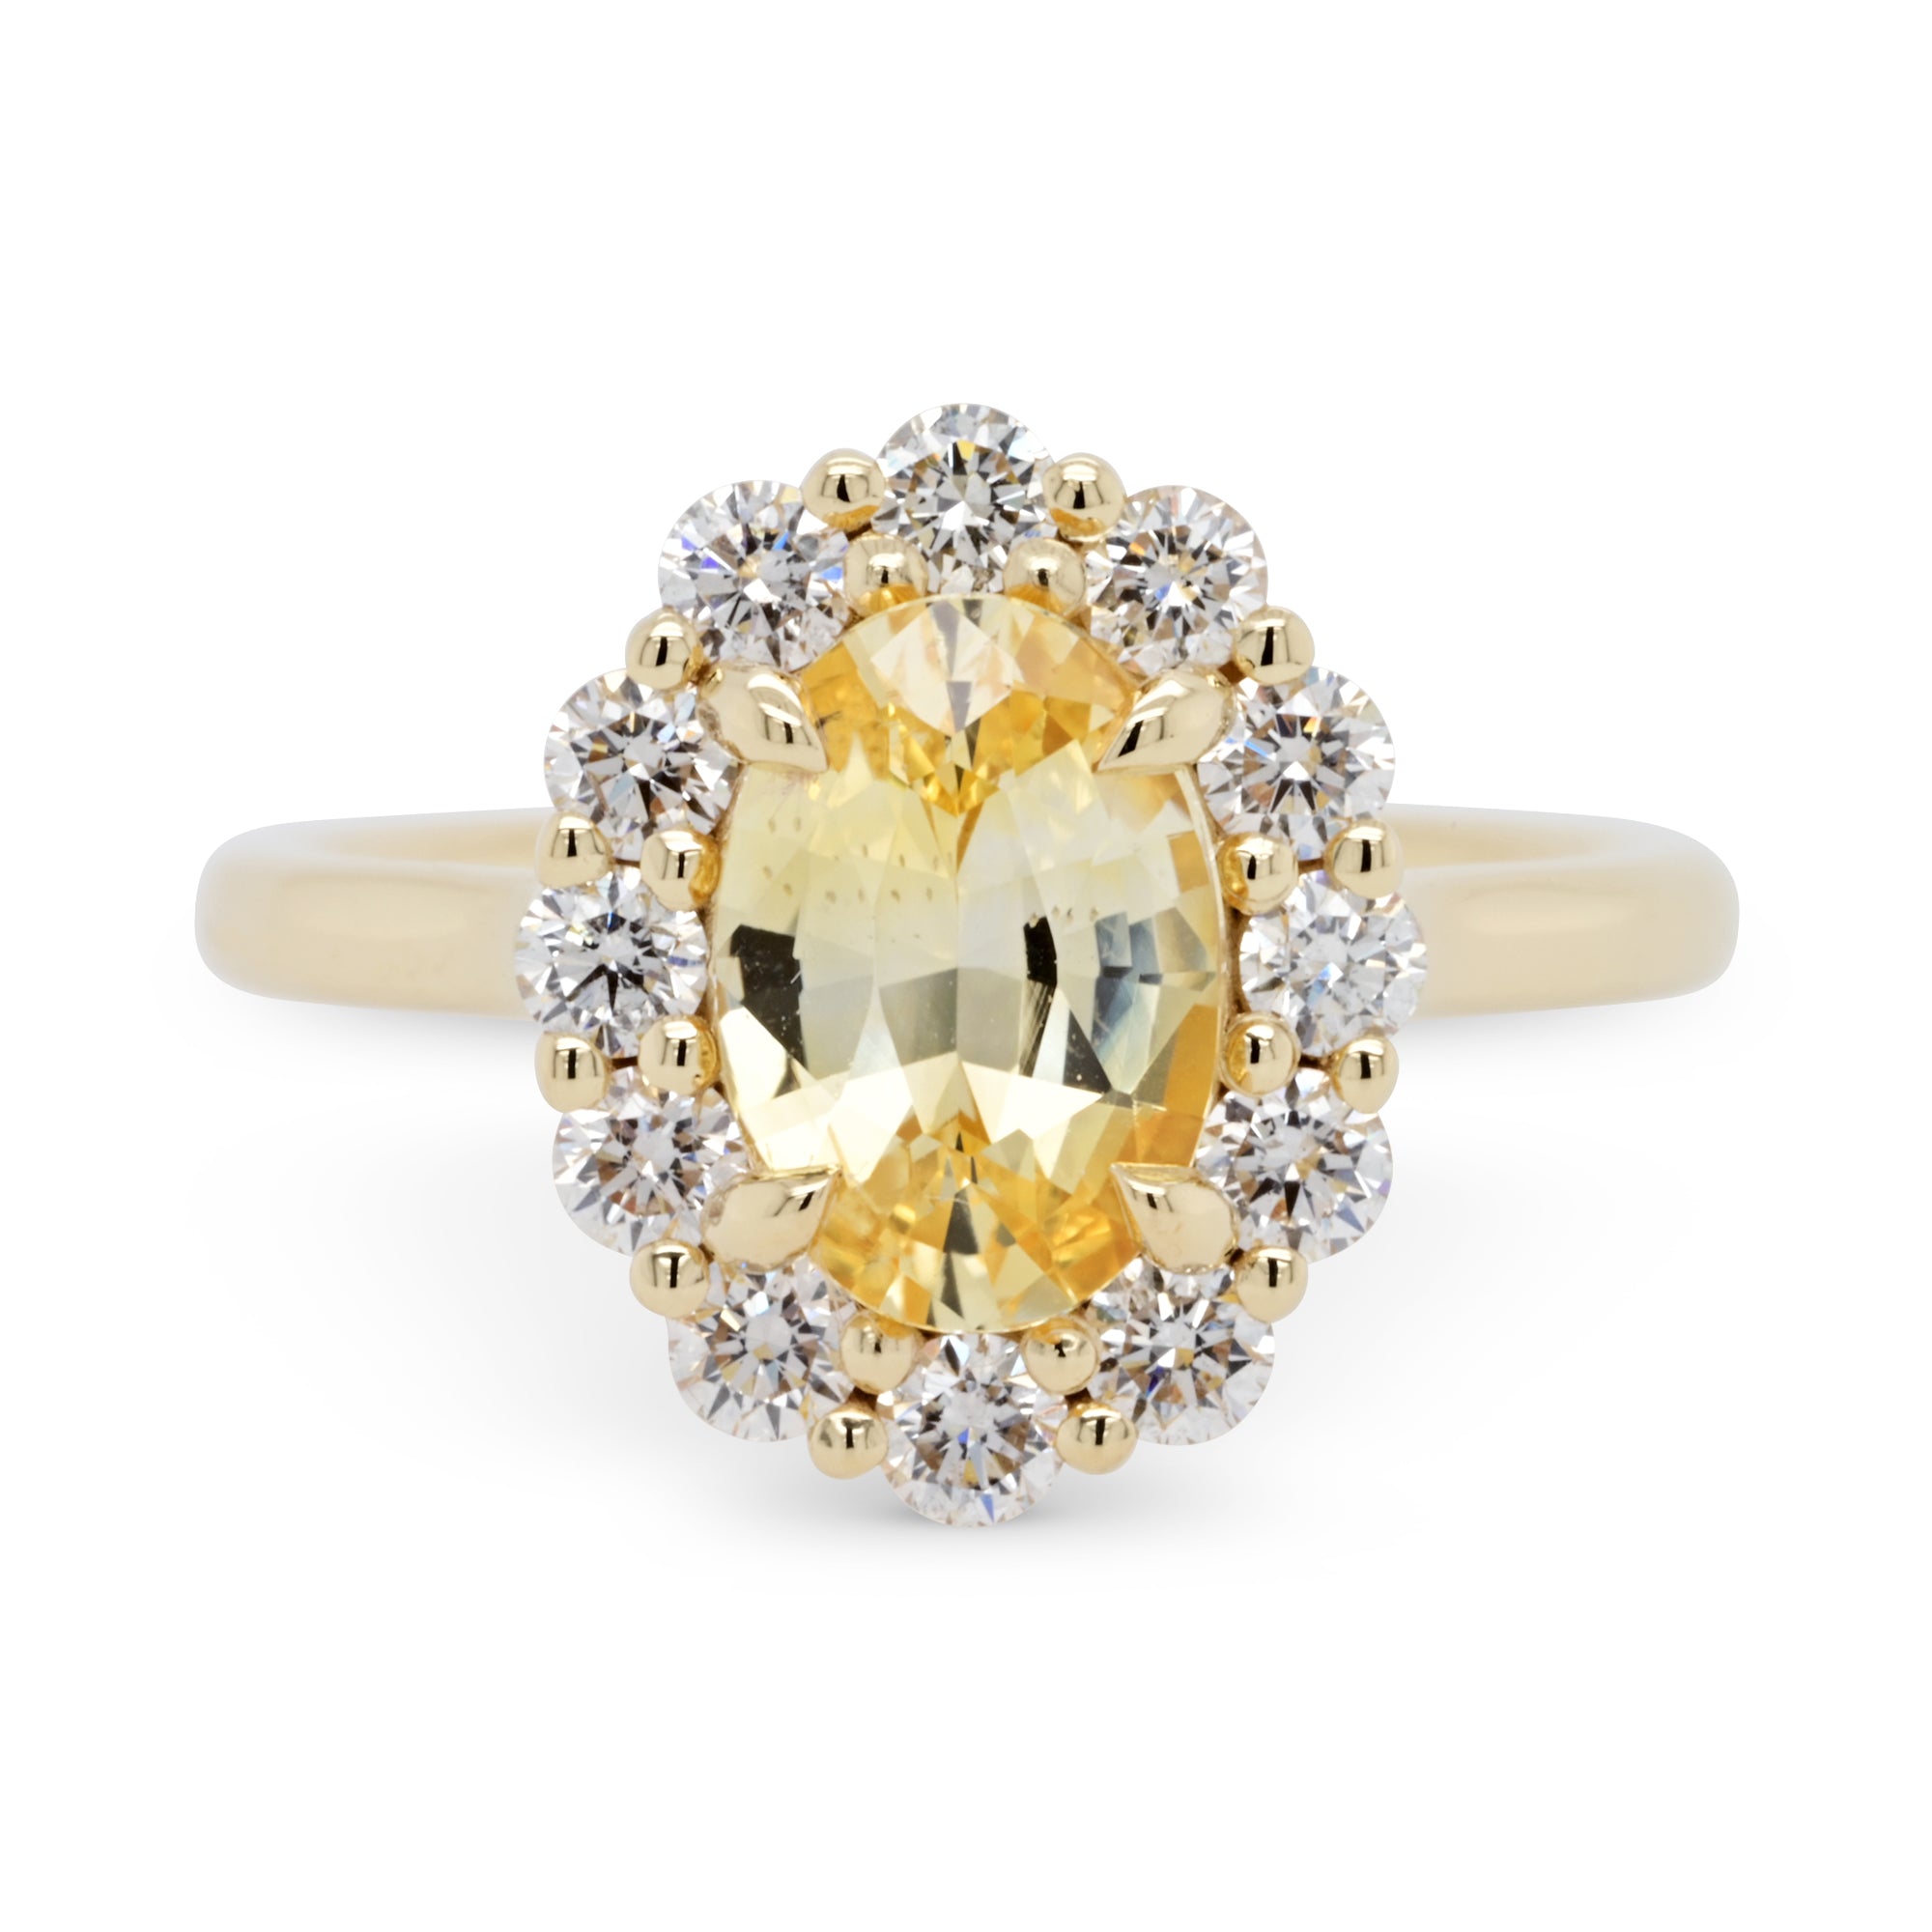 Natural Yellow Sapphire Ring 925 Silver - 100% Original Stone | eBay